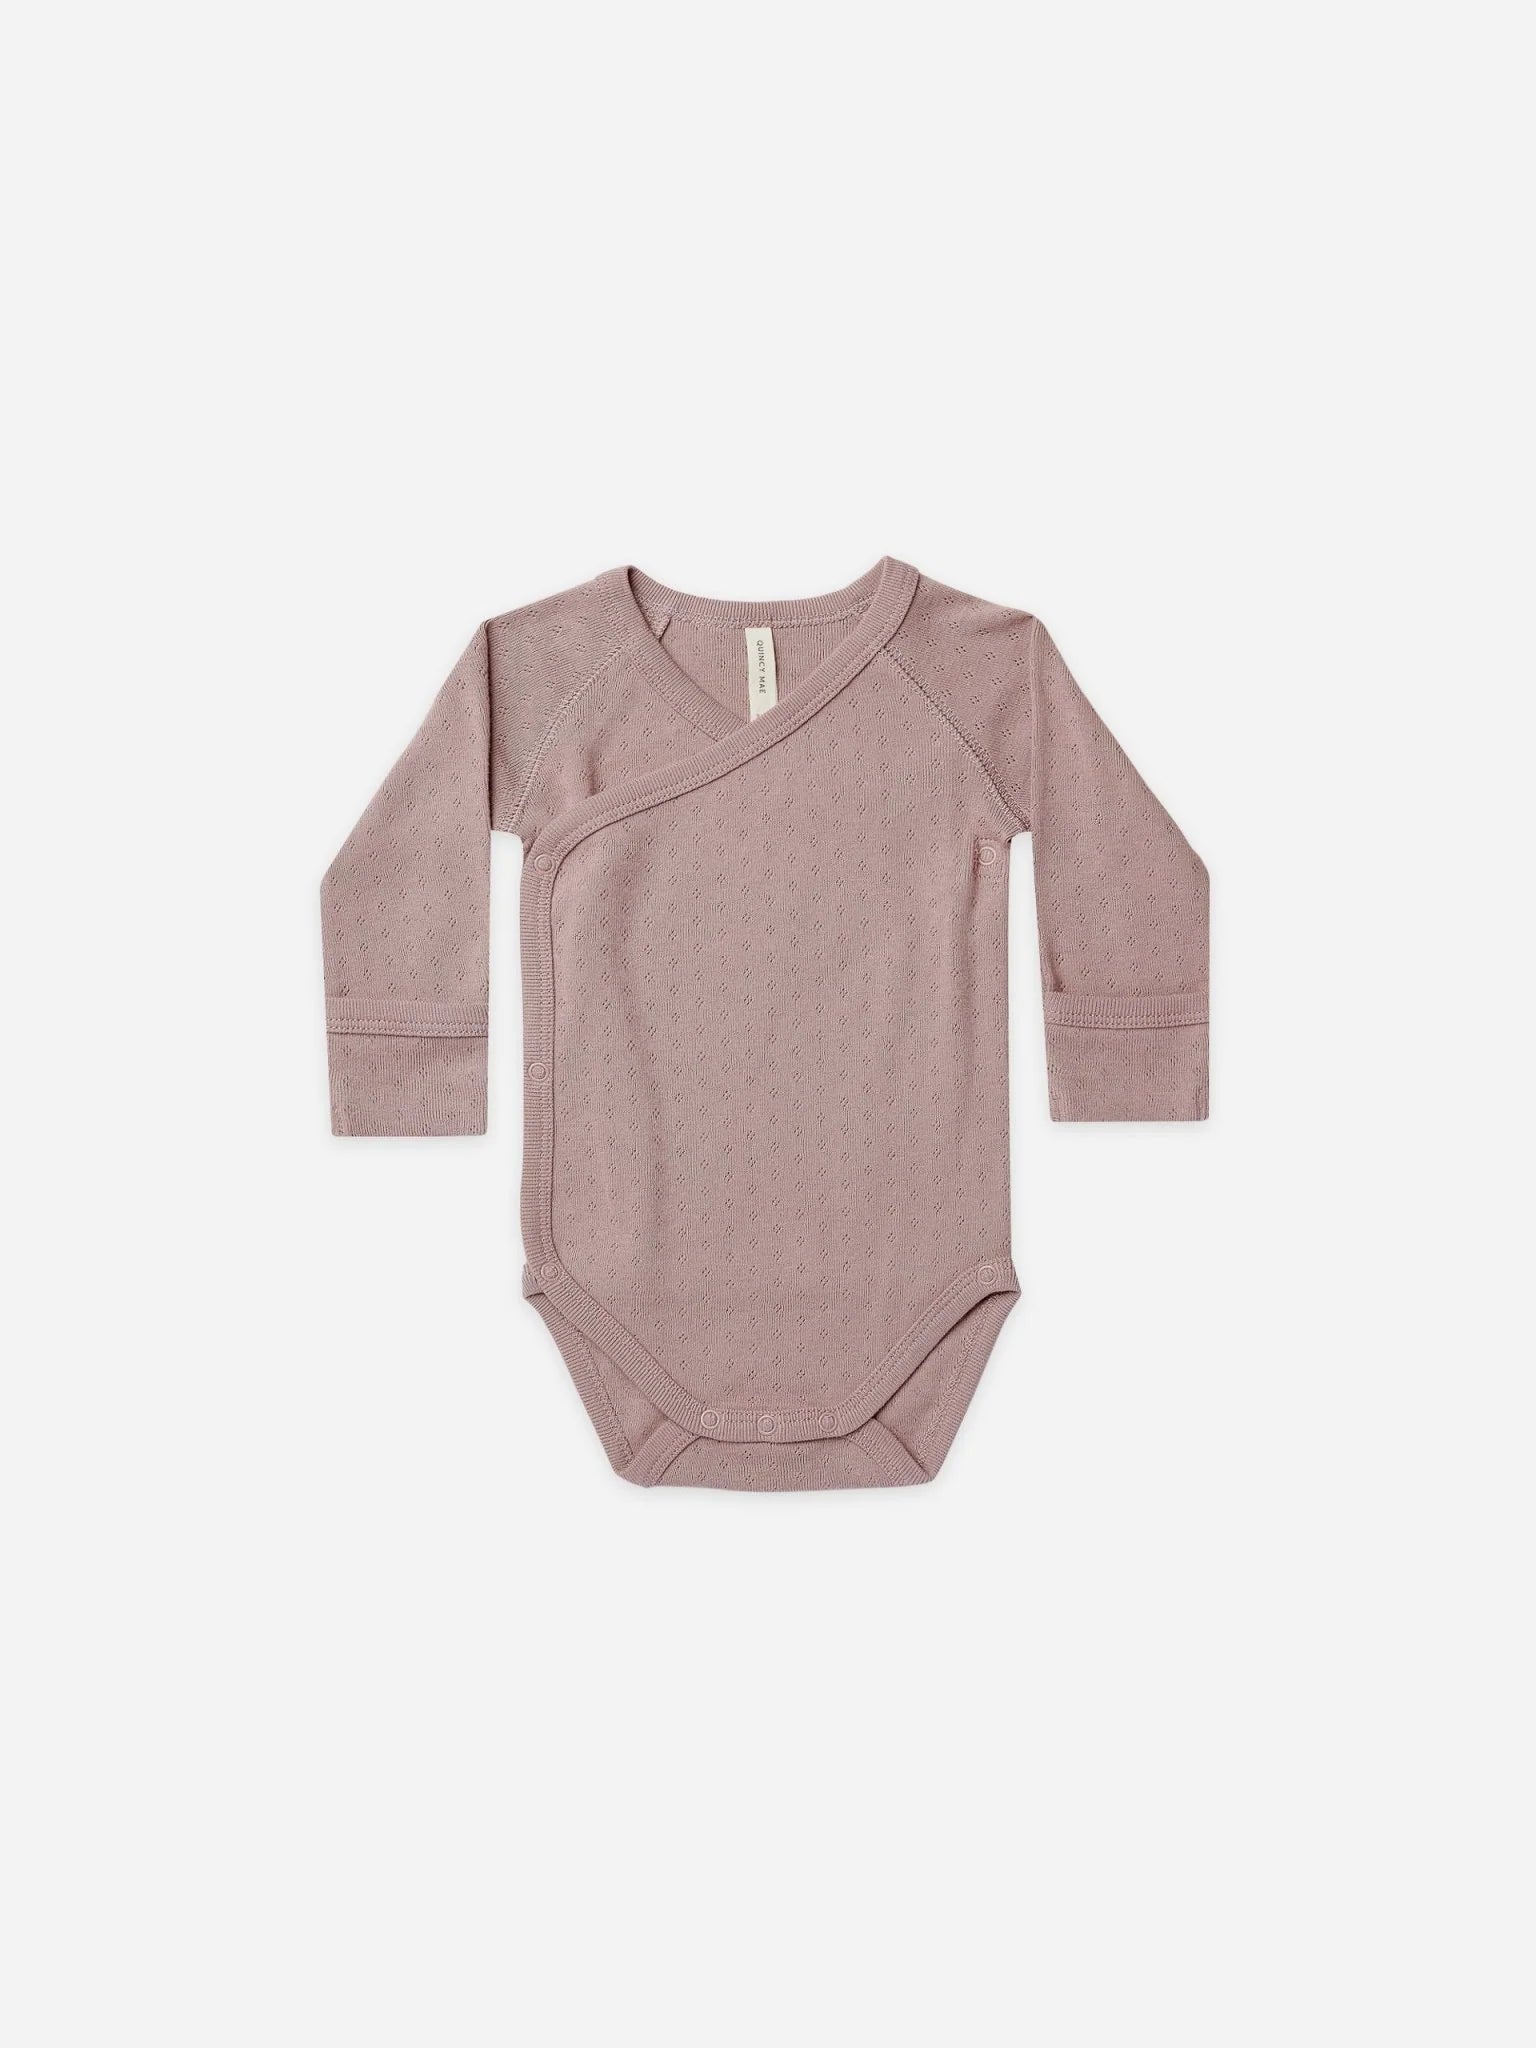 Pointelle Side Snap Bodysuit |Lilac